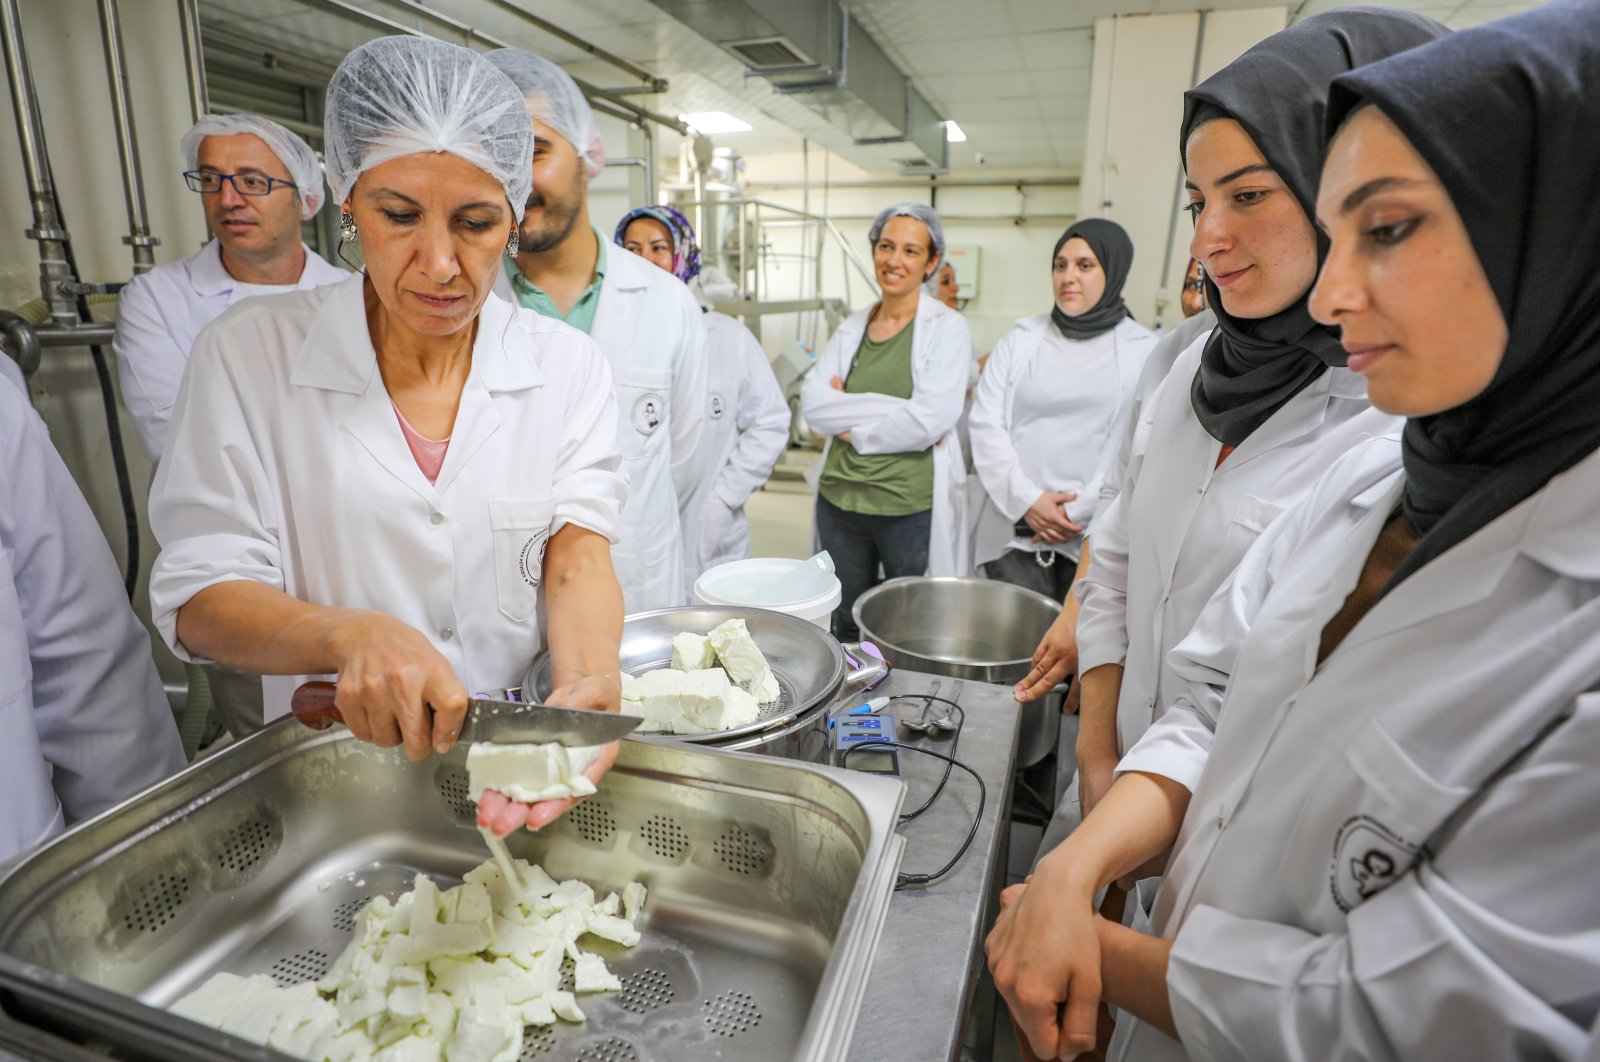 Women attend a cheese-making training in Diyarbakır, southeastern Turkey, June 20, 2022. (AA PHOTO)